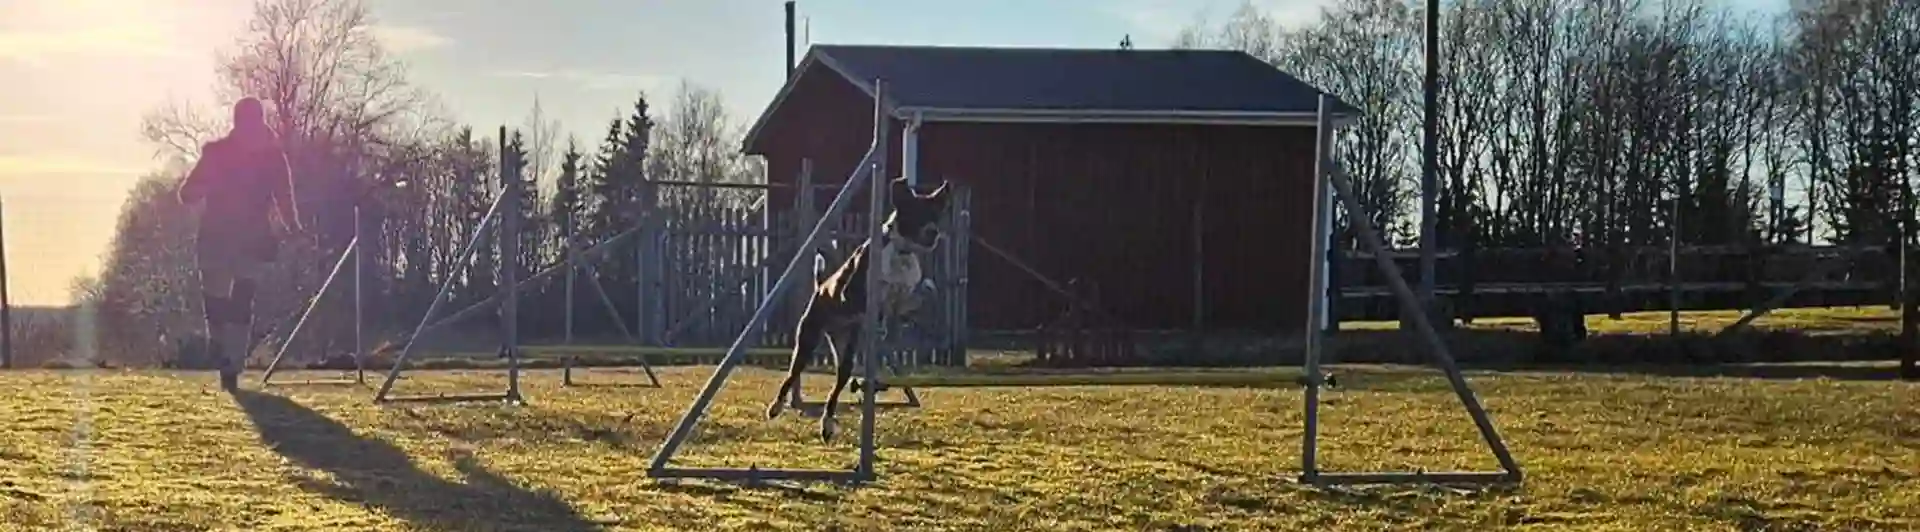 Hund hoppar över agilityhinder